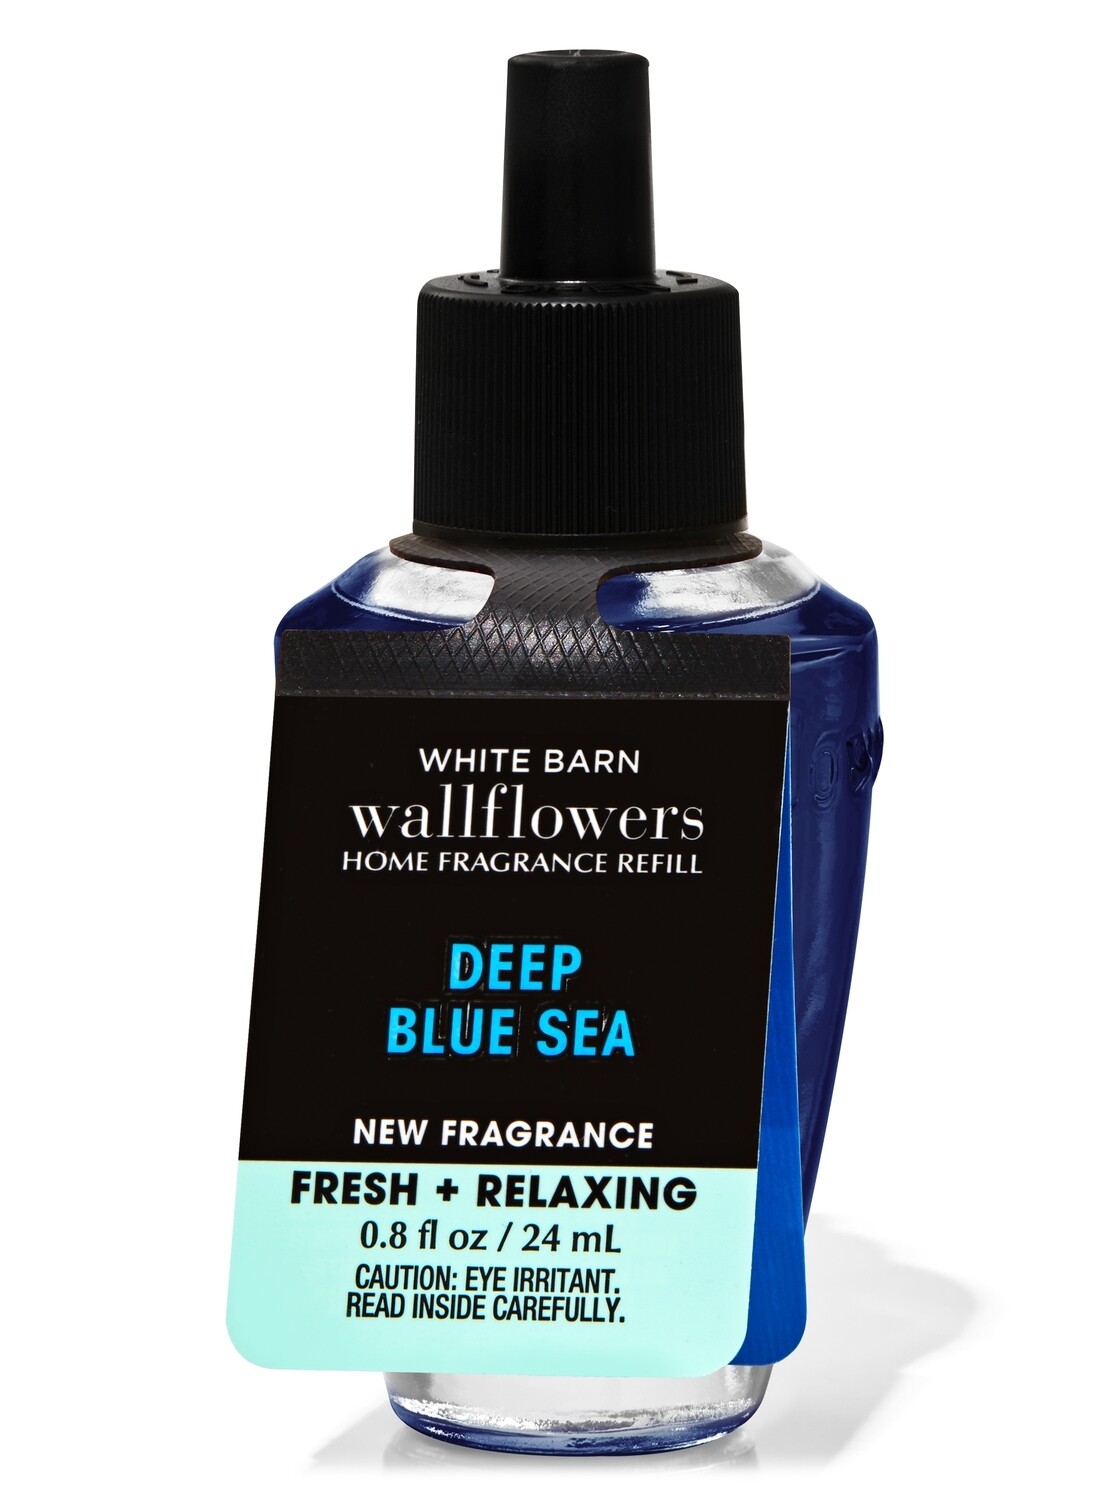 Bath and body works wallflower refill- Deep Blue Sea